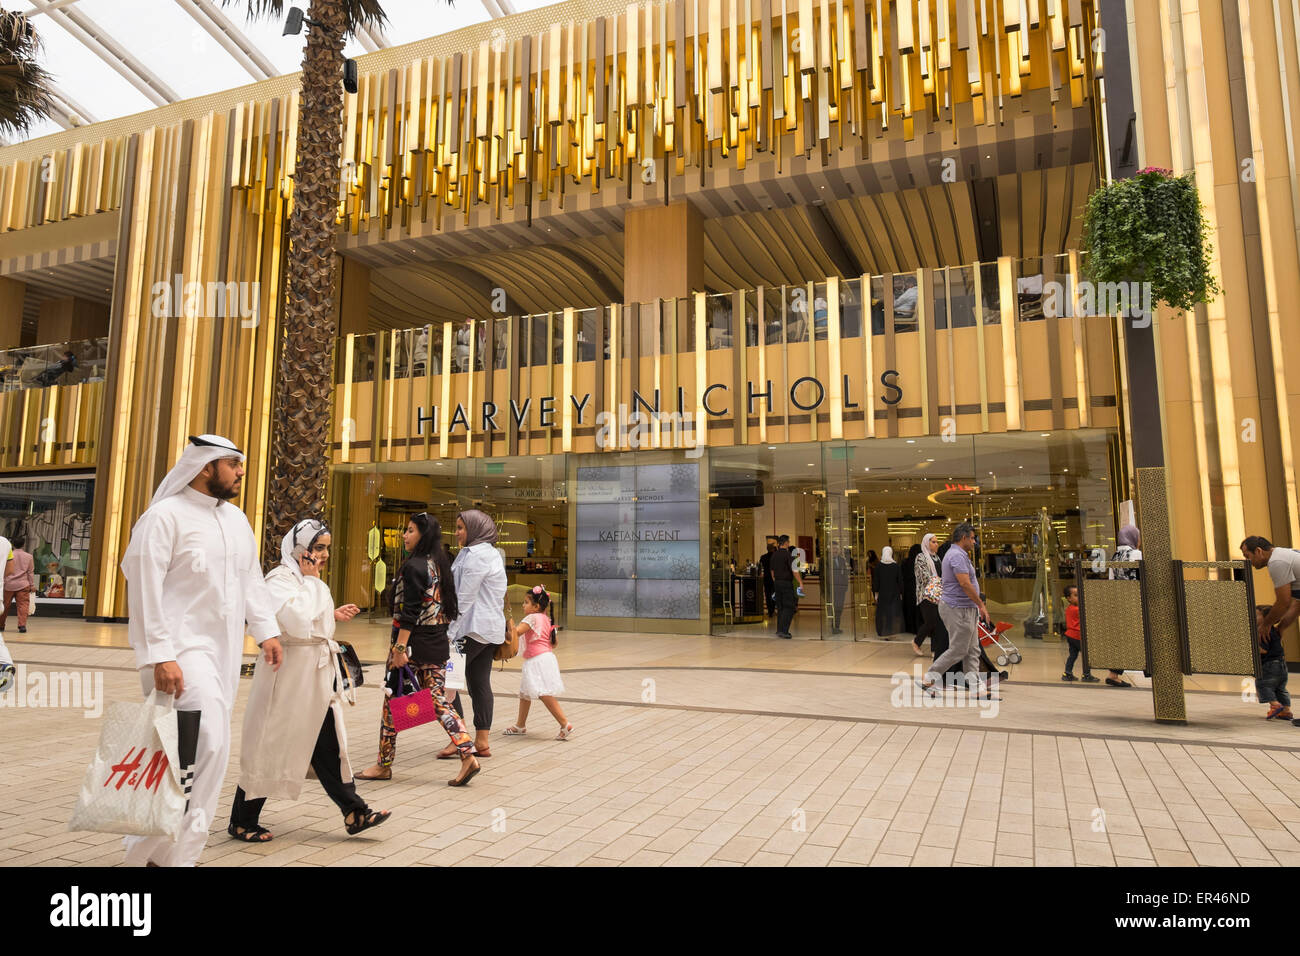 Harvey Nichols negozio di lusso presso i viali shopping mall in Kuwait City in Kuwait. Foto Stock